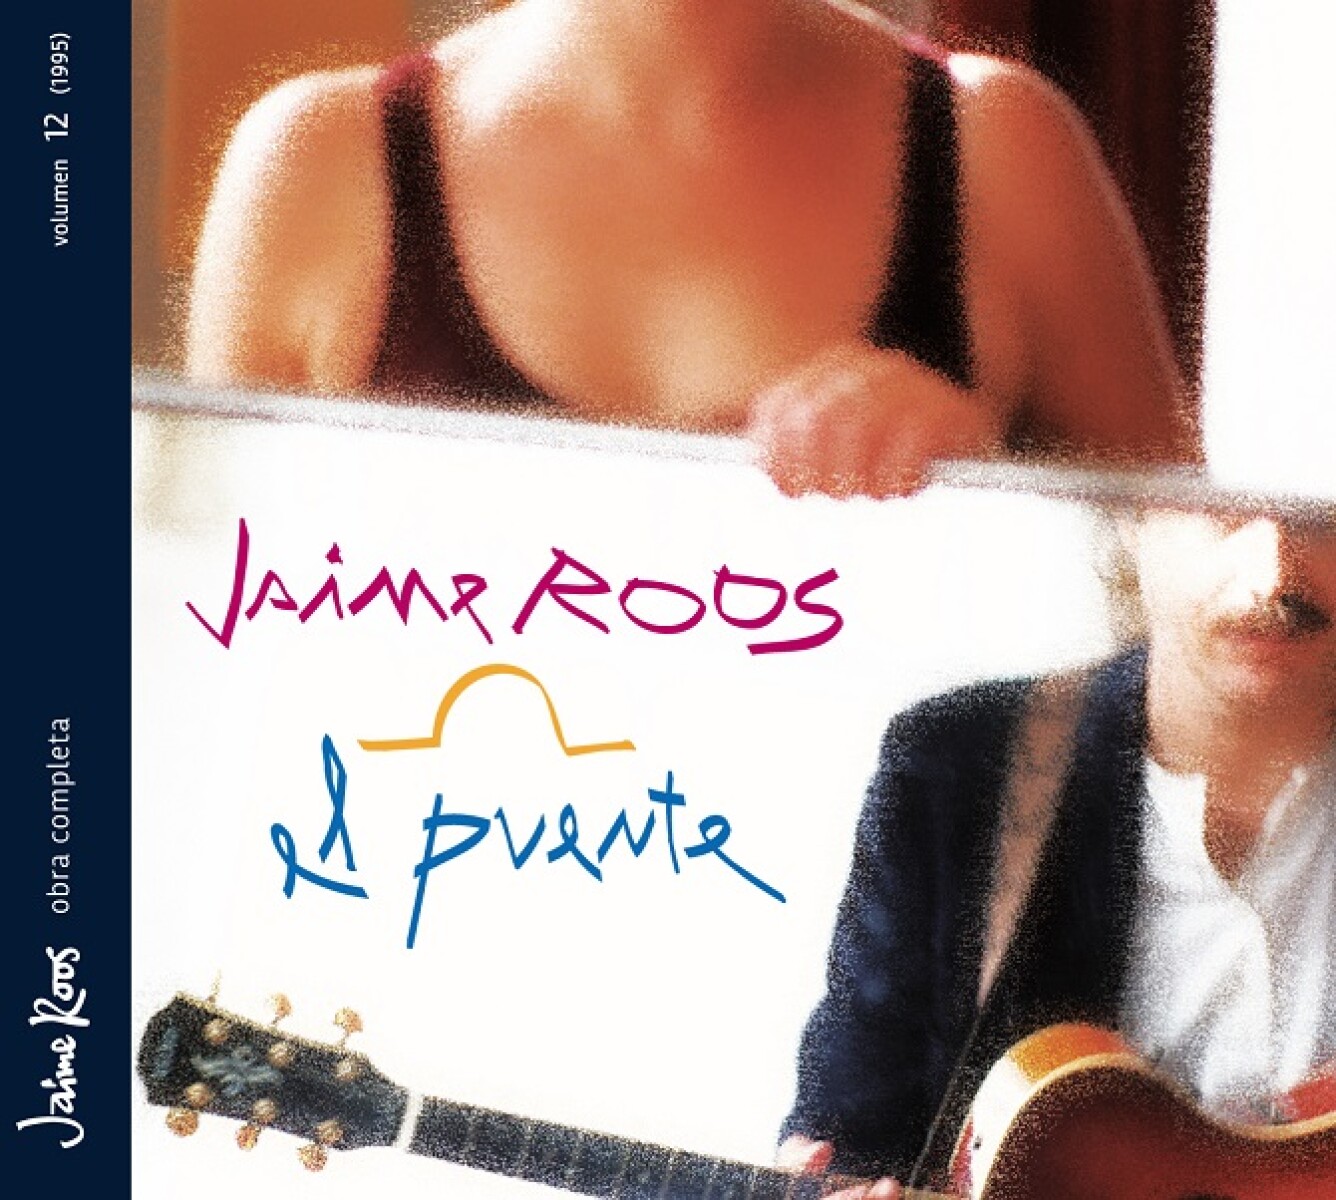 Roos Jaime-el Puente (re Master 16)-cd- 